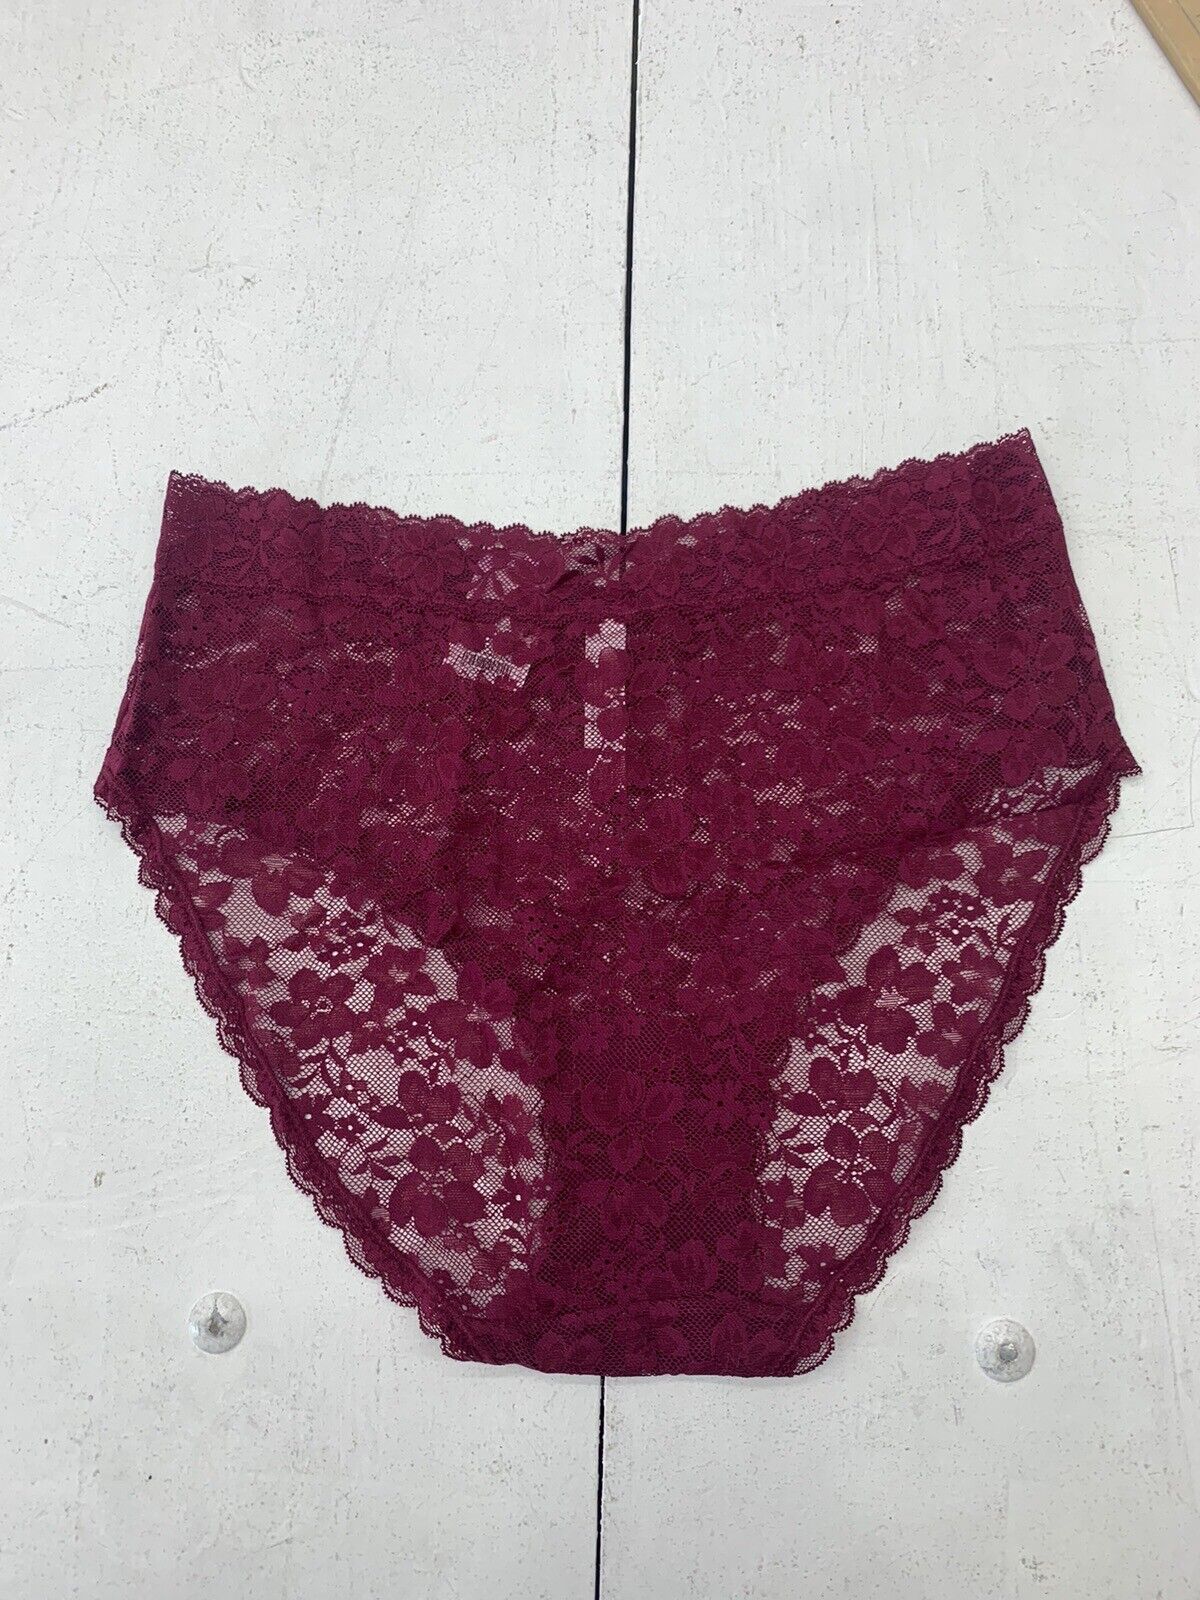 Women's Lace and Mesh Cheeky Underwear - Auden™ Lilac Purple L